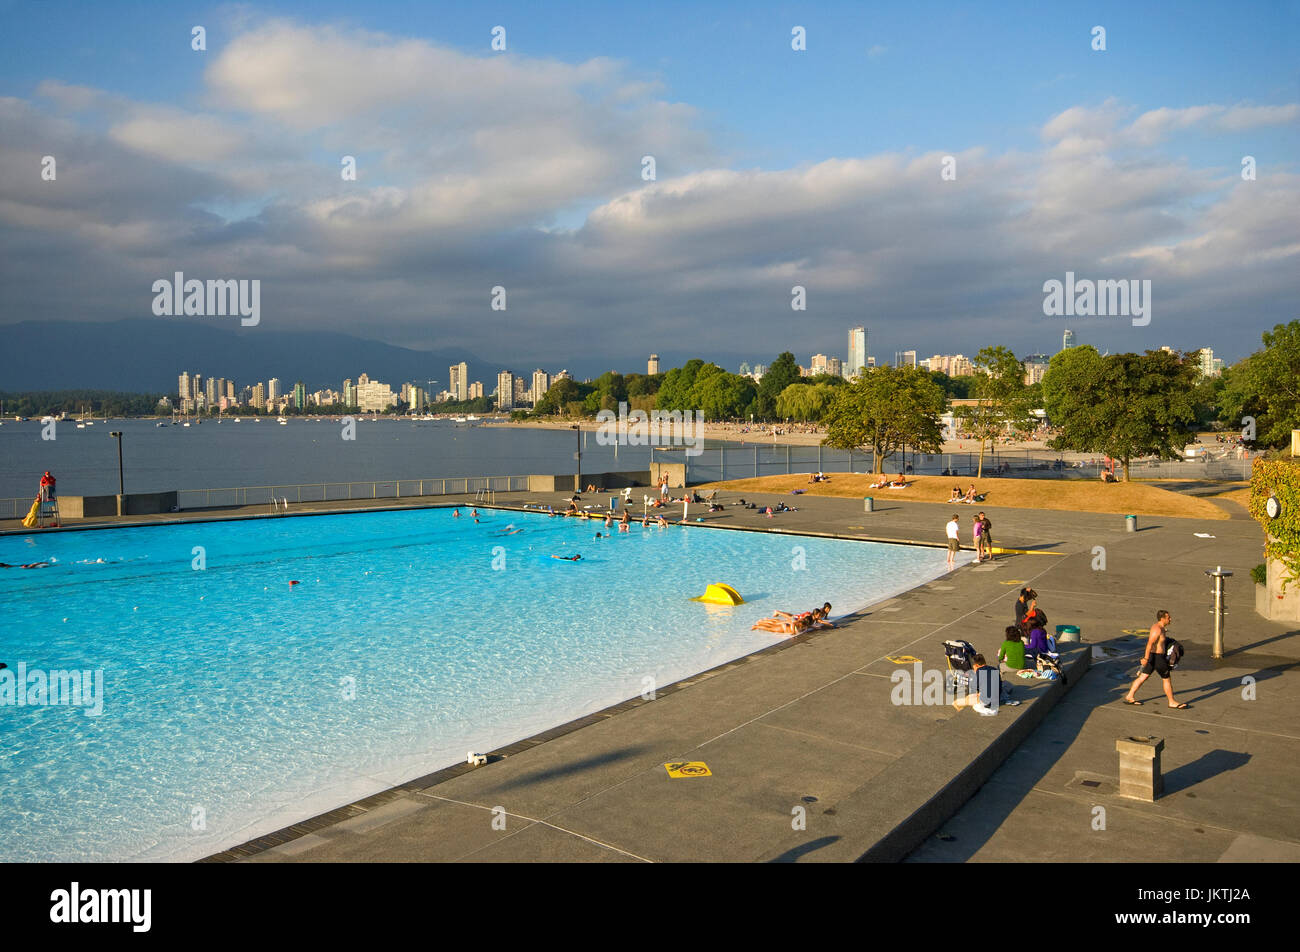 https://c8.alamy.com/comp/JKTJ2A/swimming-pool-at-kitsilano-beach-park-english-bay-vancouver-british-JKTJ2A.jpg